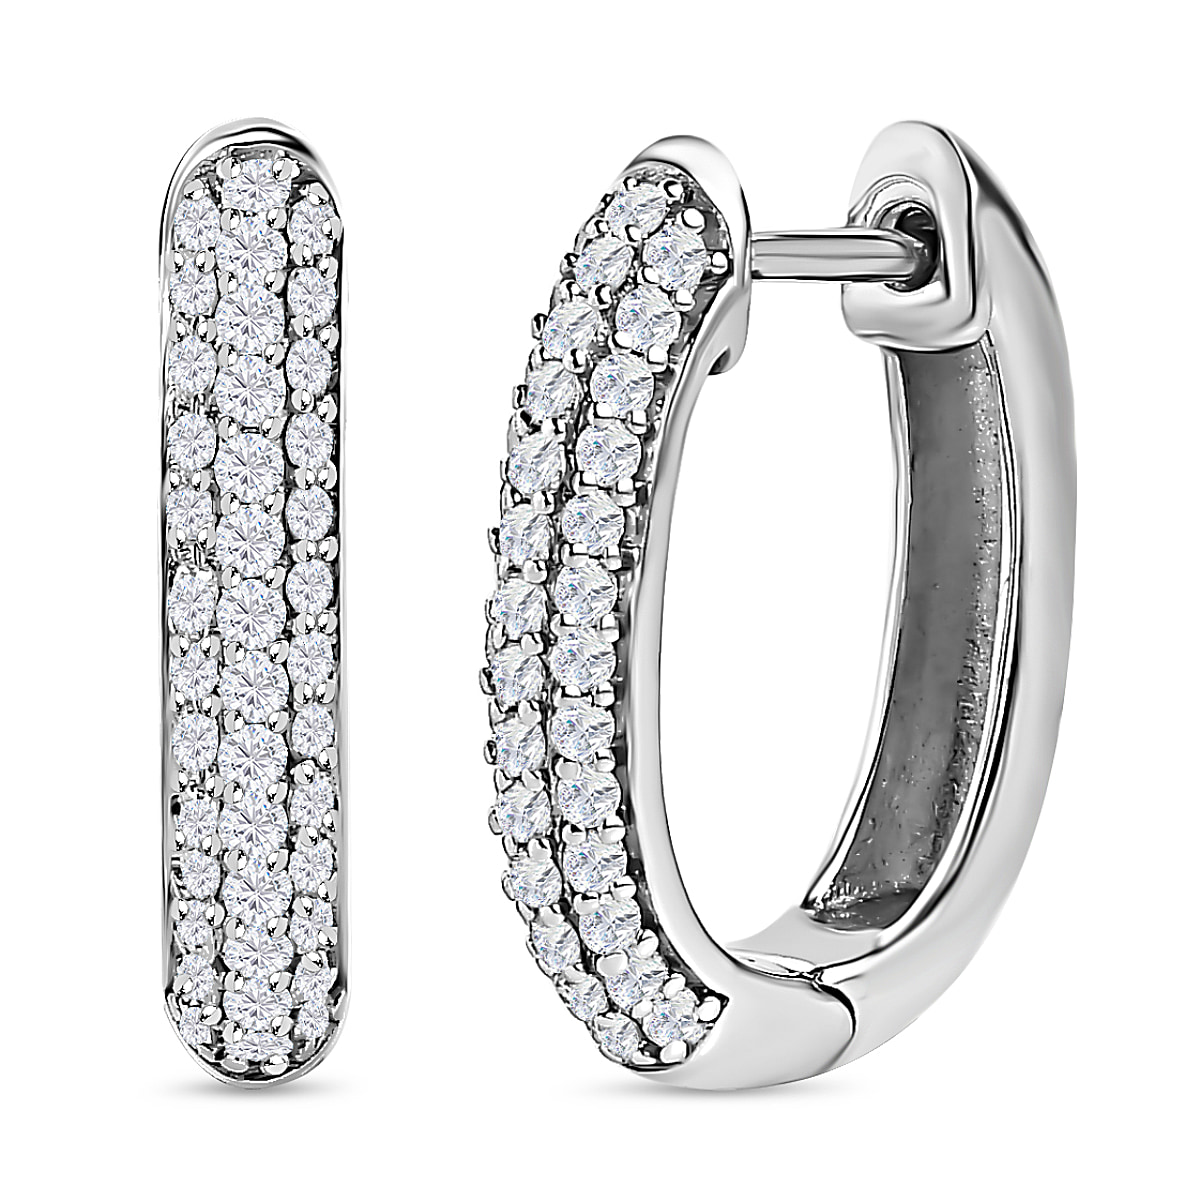 Moissanite Hoop Earrings in Platinum Overlay Sterling Silver 1.04 Ct, Silver Wt. 5.44 Gms